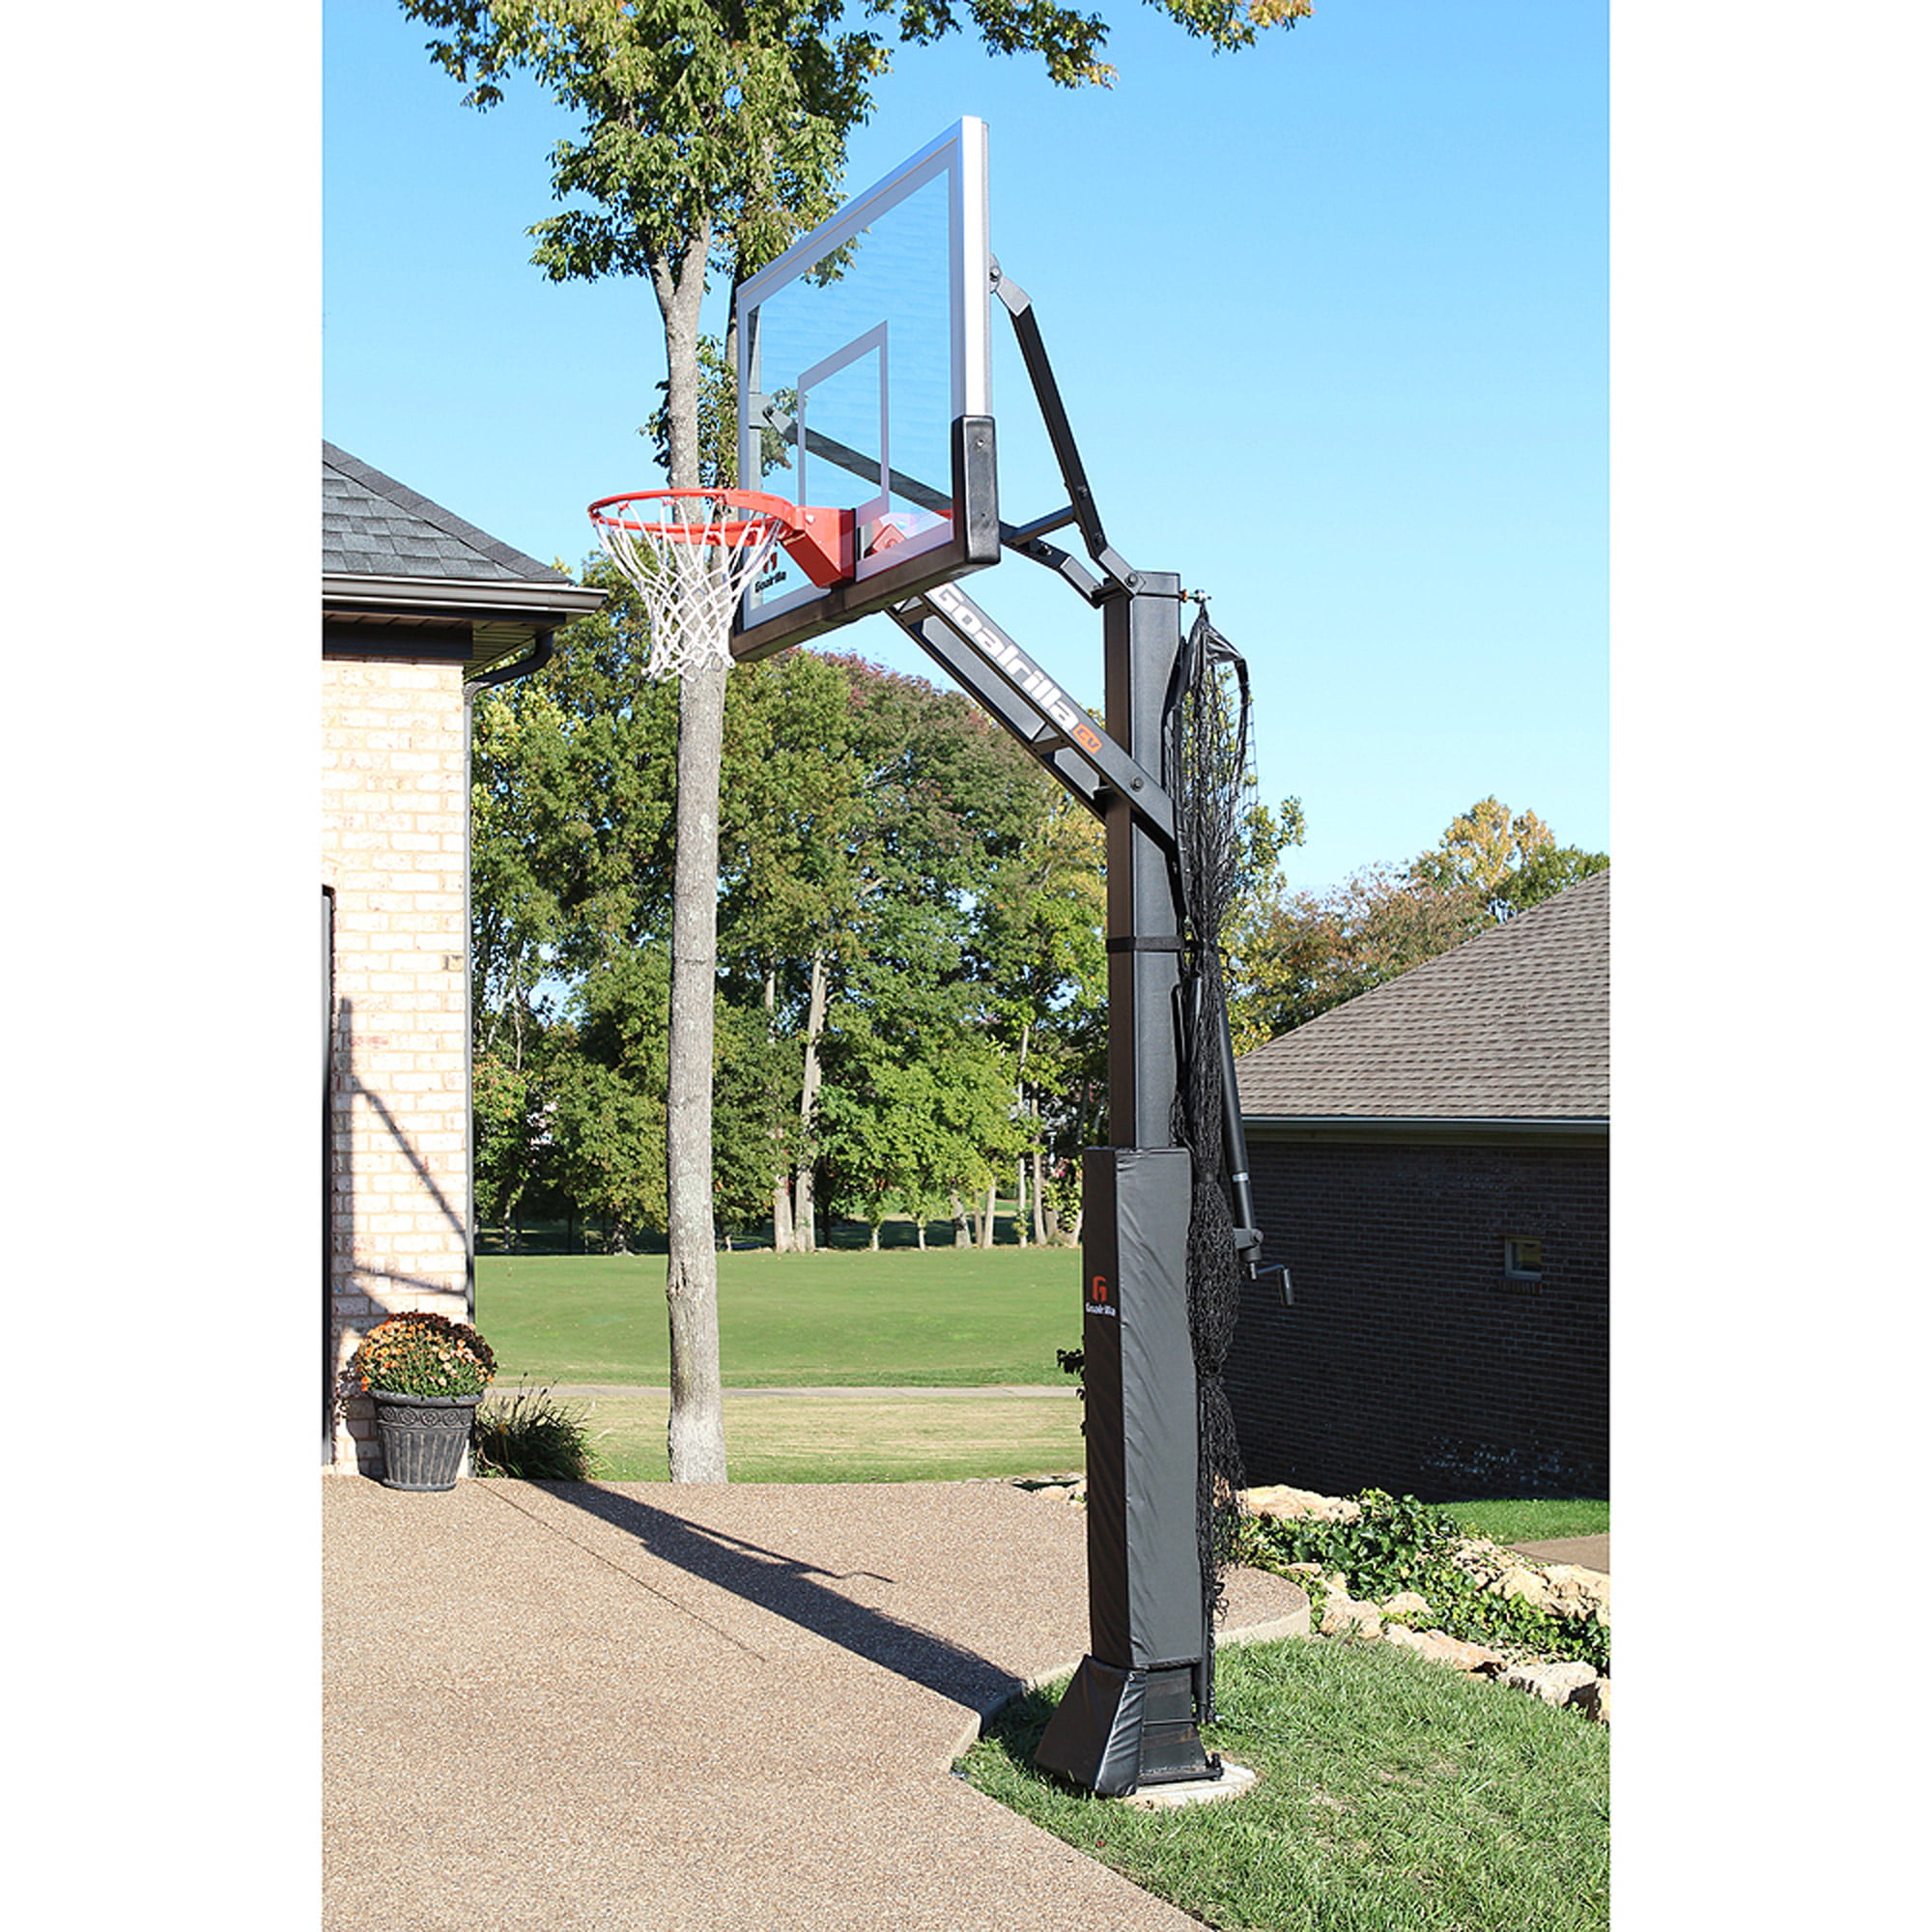 Goalrilla Basketball Accessories B2800W Yard Guard for sale online 